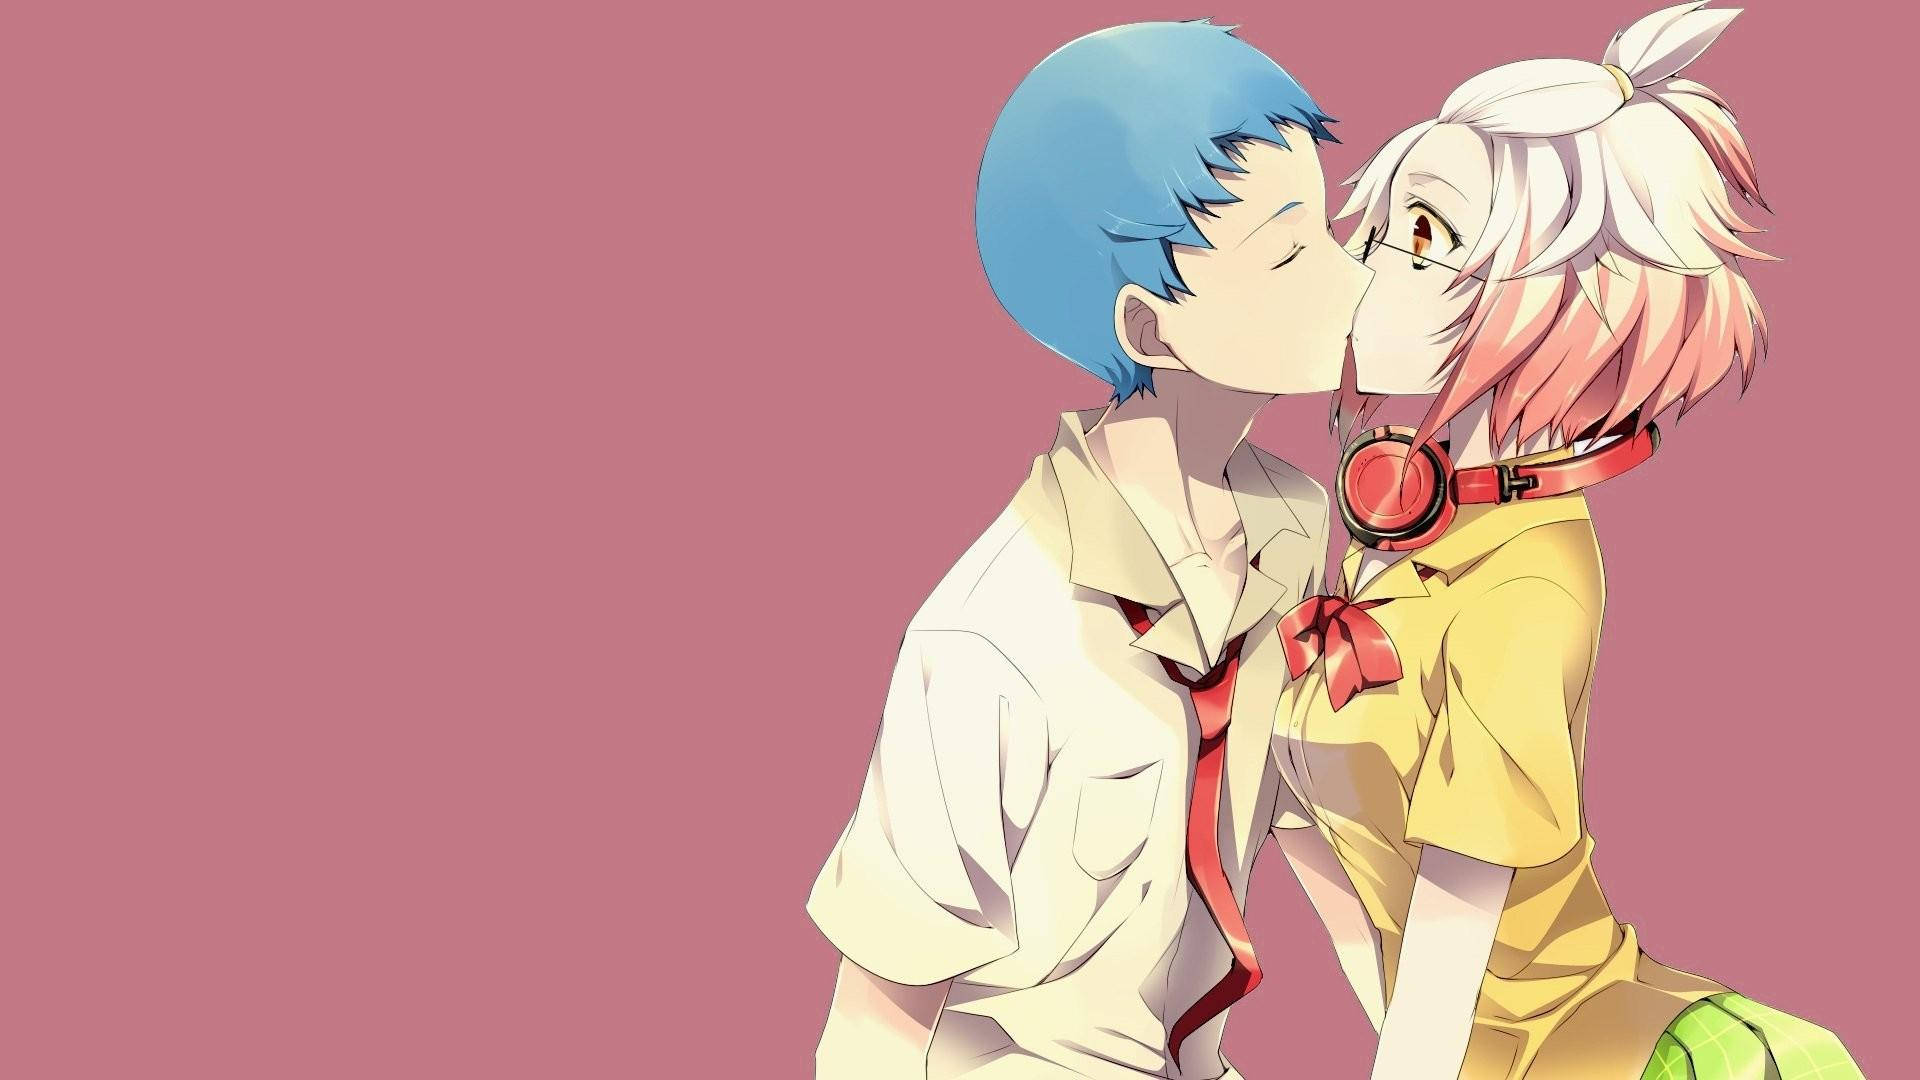 Free Anime Couple Kiss Wallpaper Downloads, [100+] Anime Couple Kiss  Wallpapers for FREE 